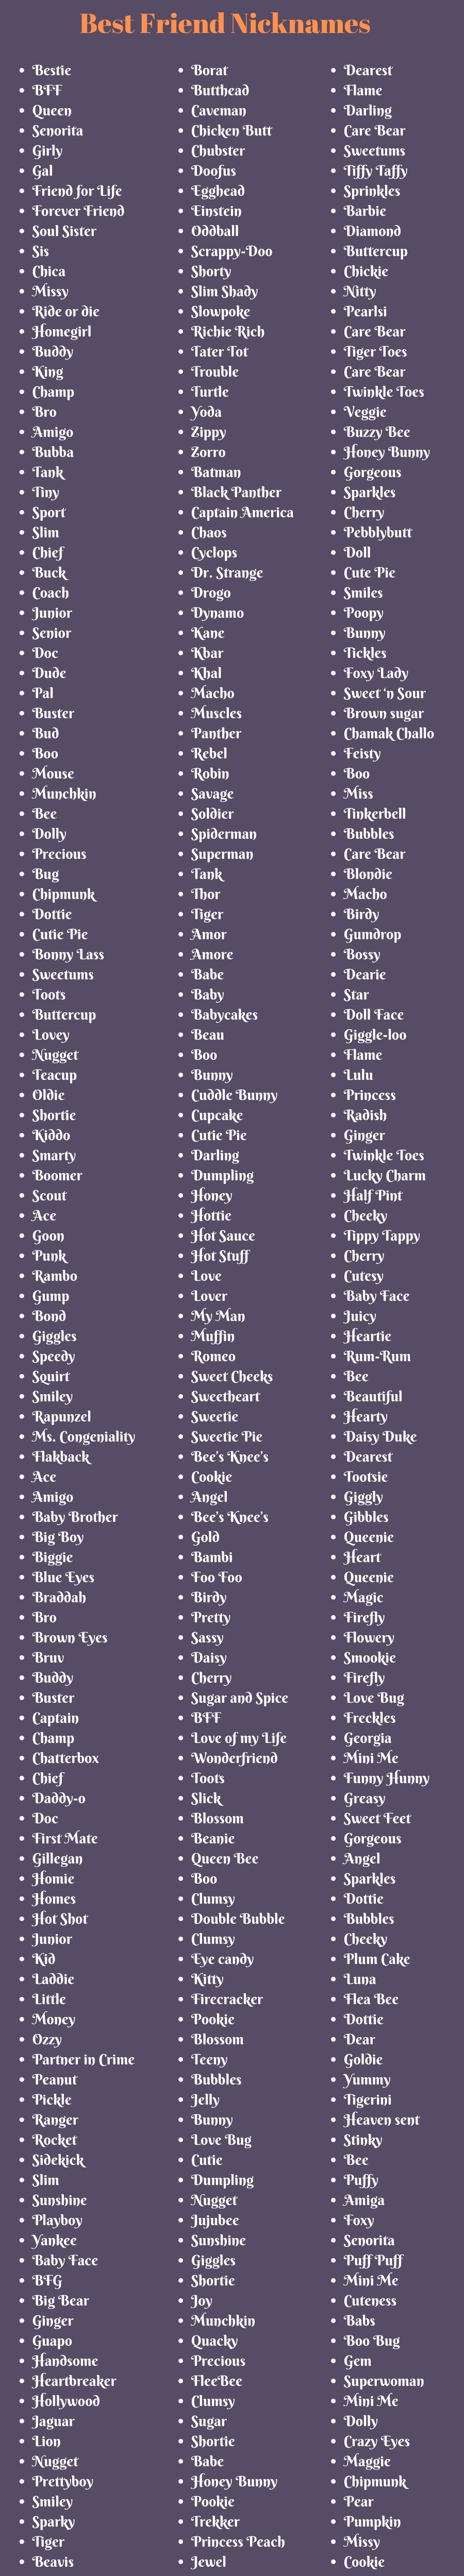 Best friend nicknames list